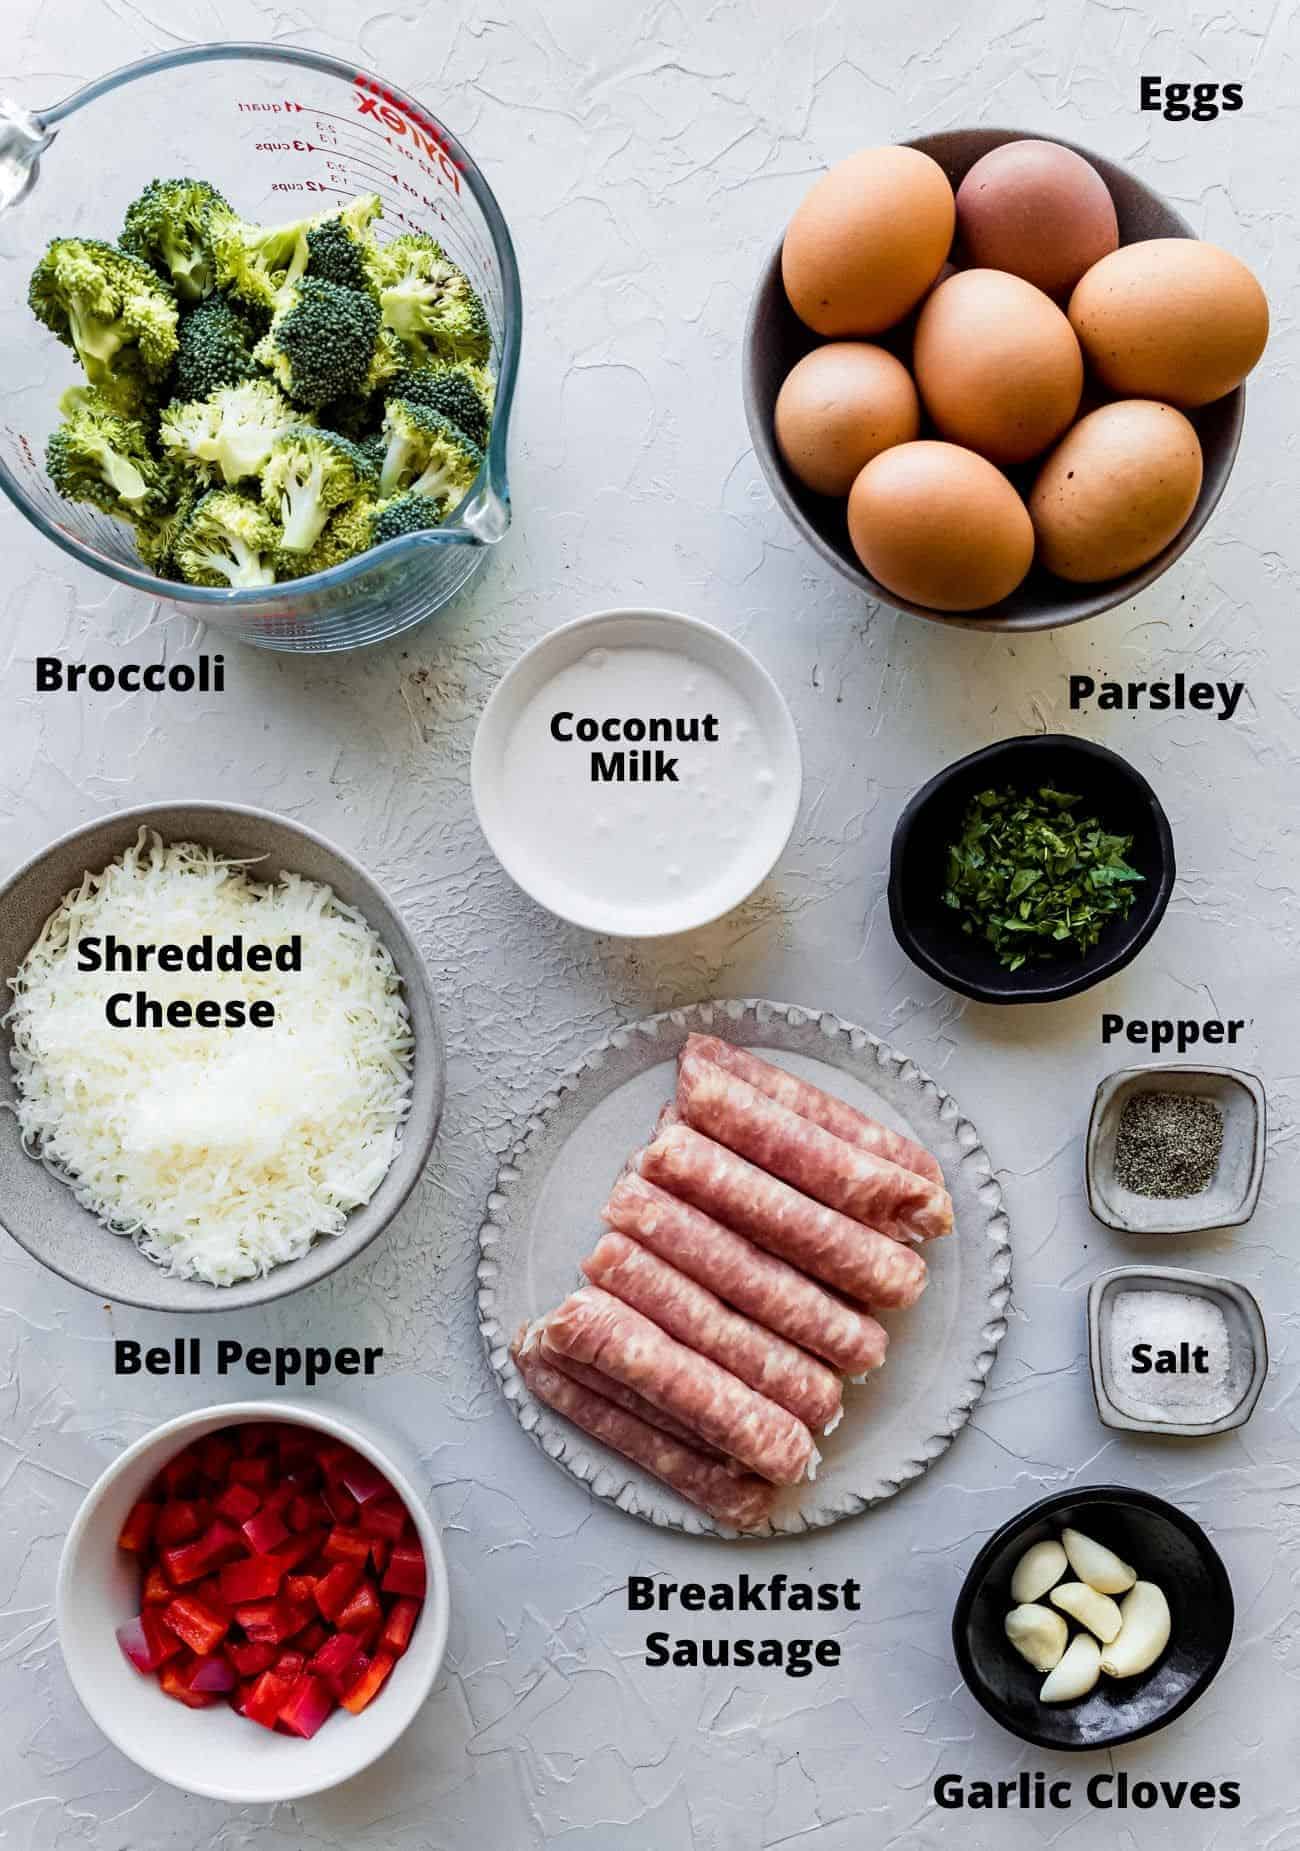 ingredients to make a low carb egg bake: Eggs, Brccoli, Coconut Milk, Parsley, Shredded Cheese, Bell Pepper, Breakfast Sausage, Pepper, Salt, Garlic Cloves